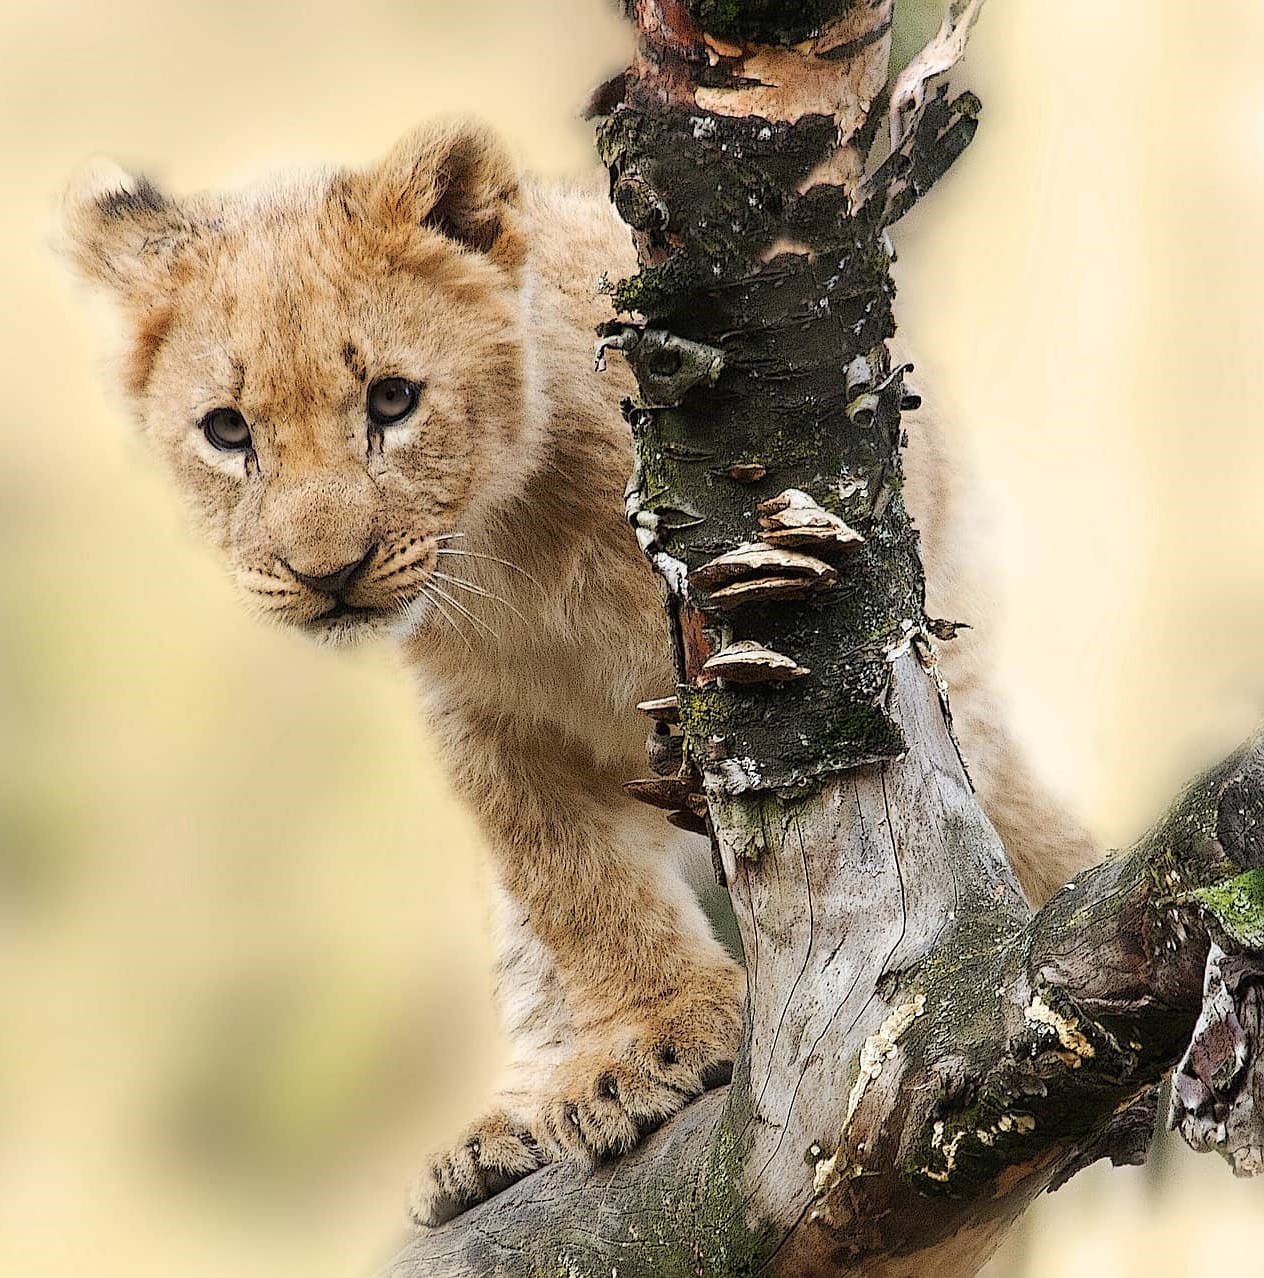 Cute pics of lion cubs.